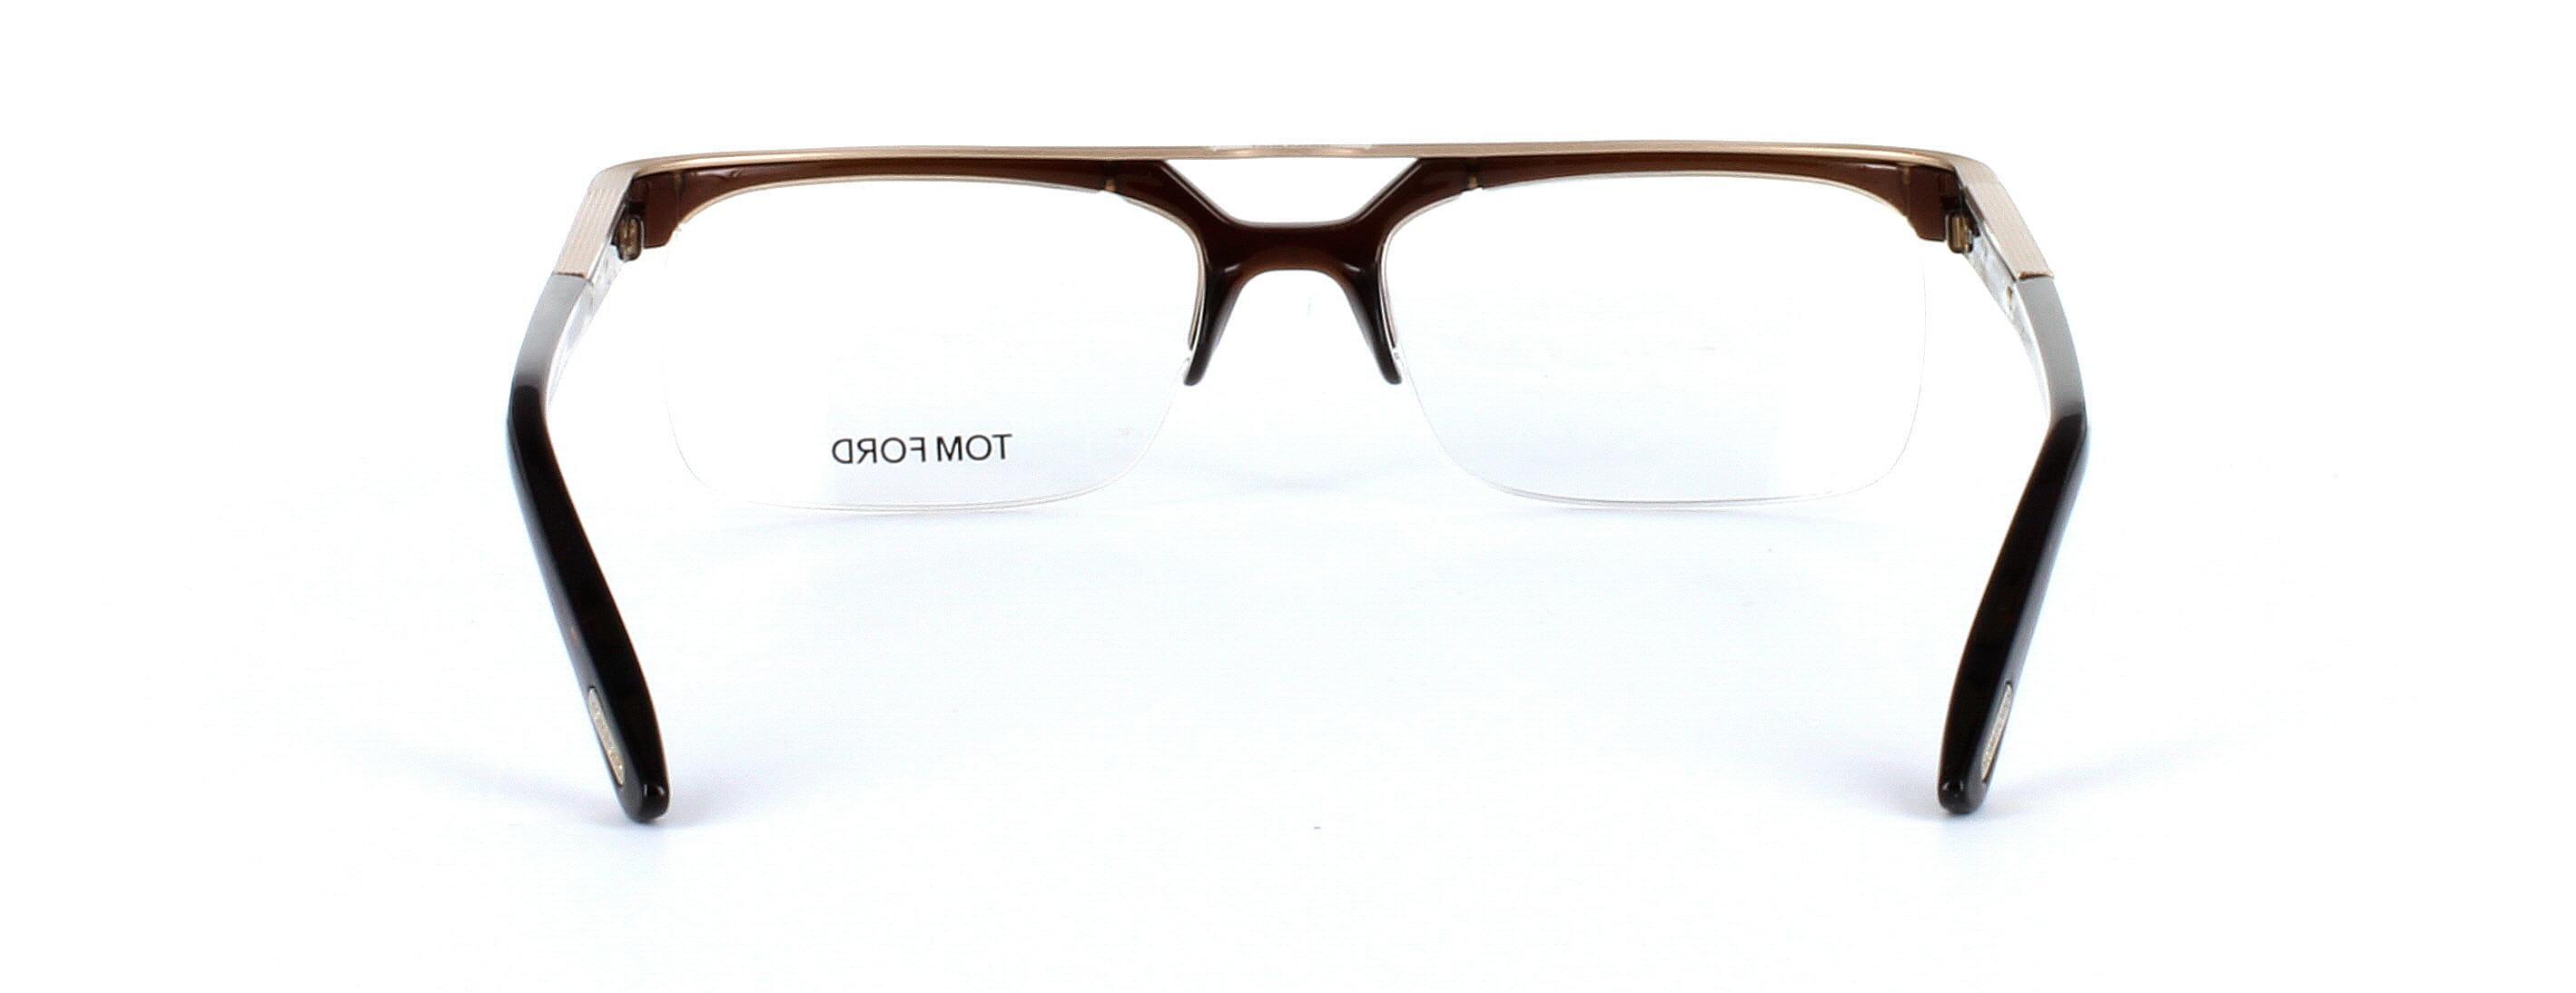 Tom Ford - 5069 - Unisex semi-rimless glasses - image 3